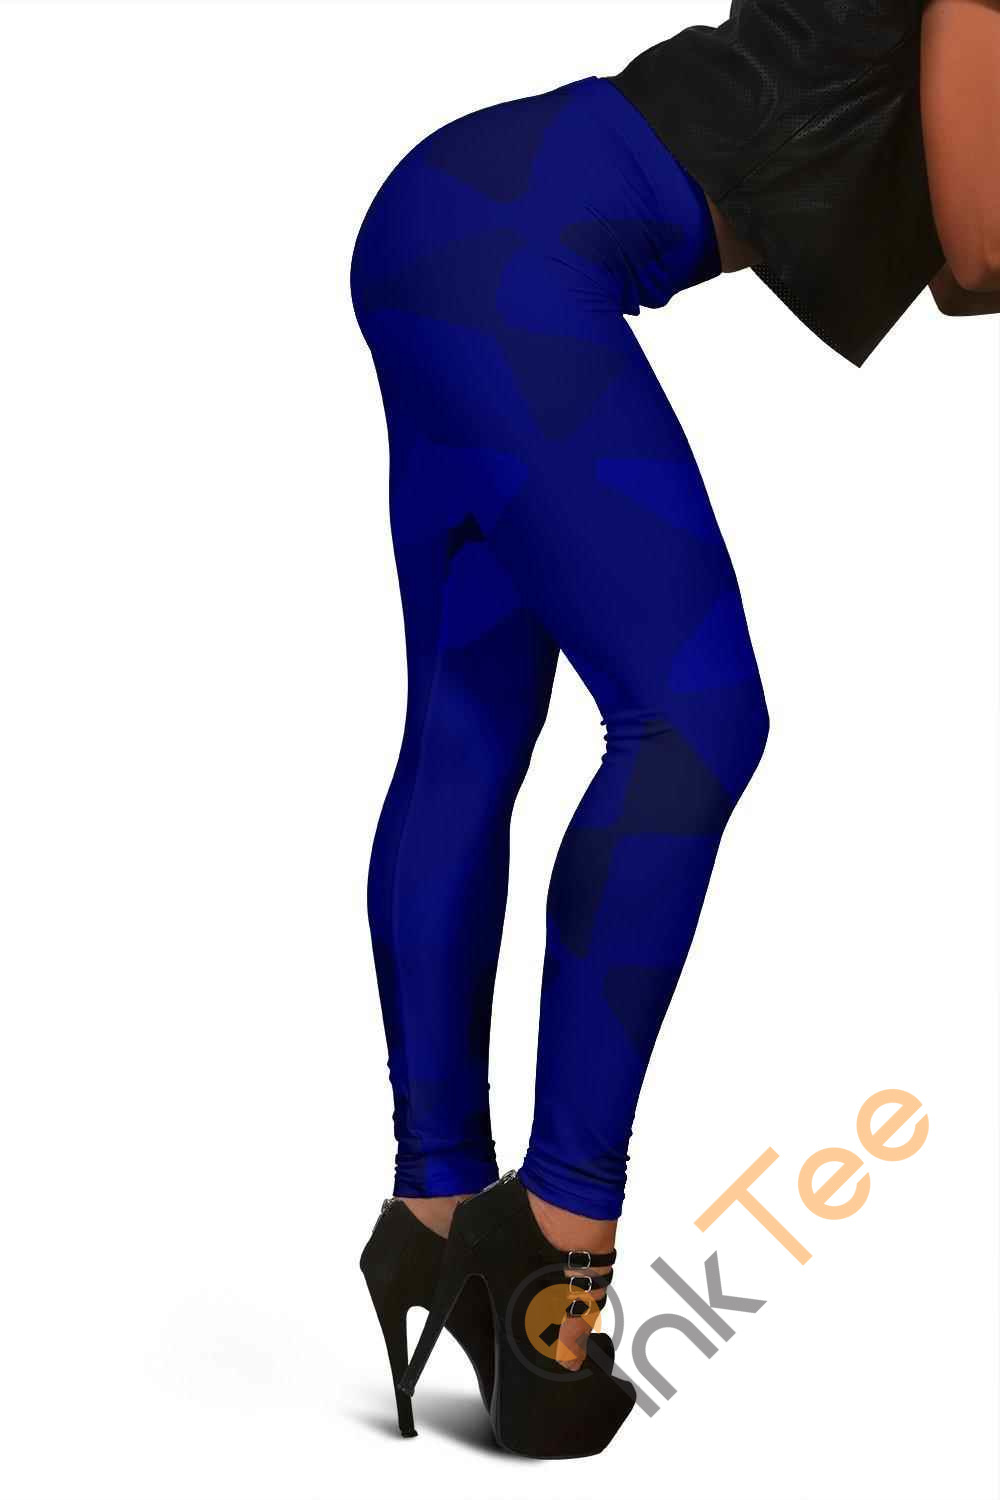 Inktee Store - Midnight Blue 3D All Over Print For Yoga Fitness Women'S Leggings Image